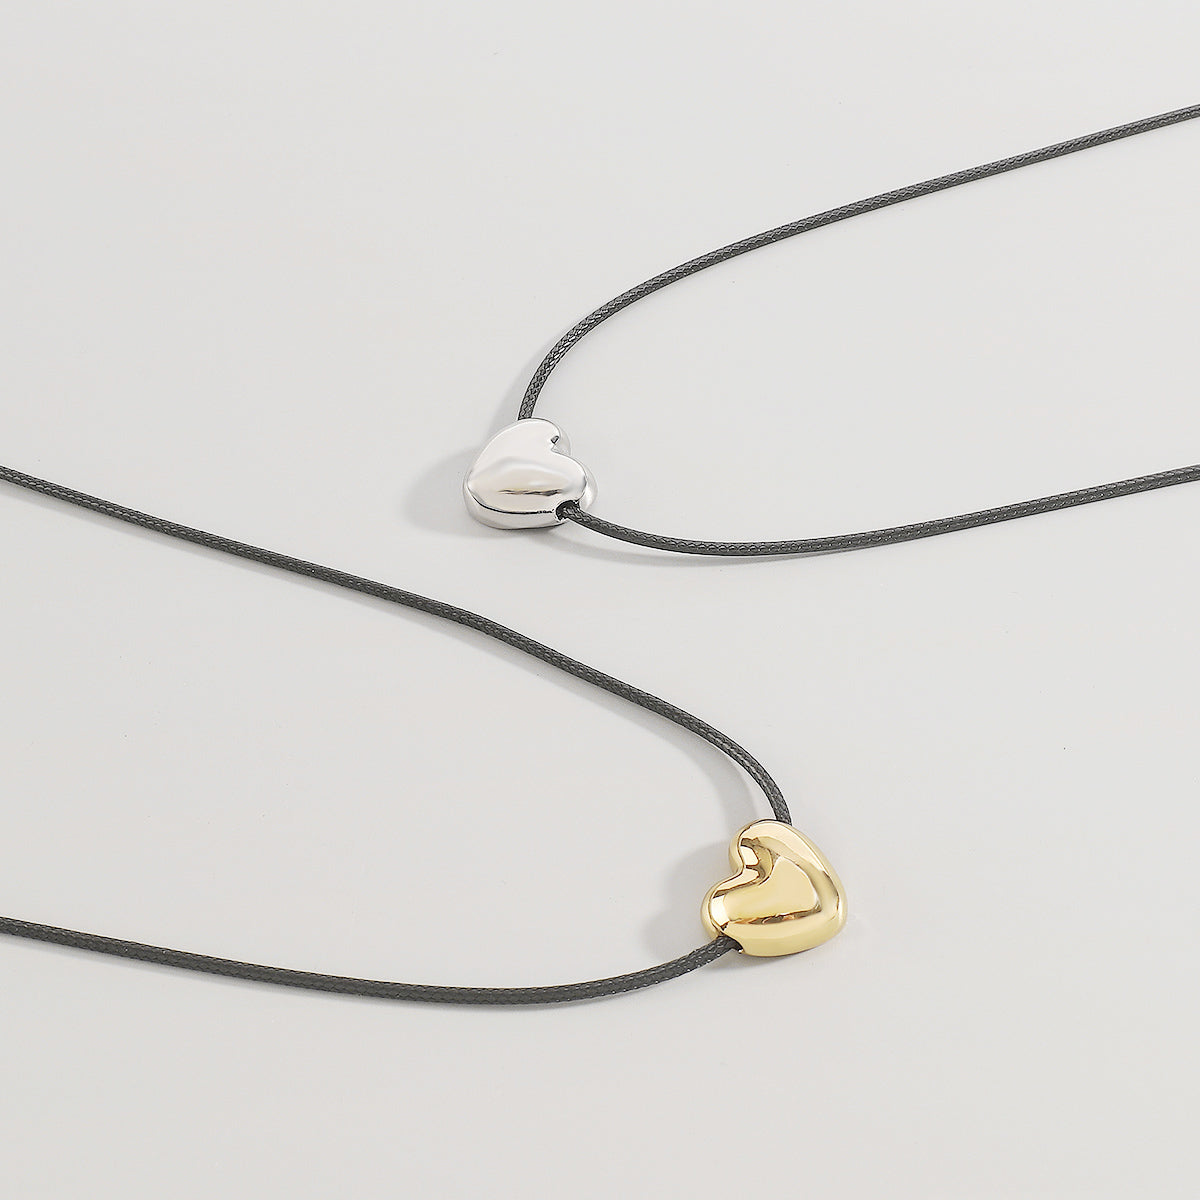 N11419 Adjustable Drawstring Heart Pendant Necklace